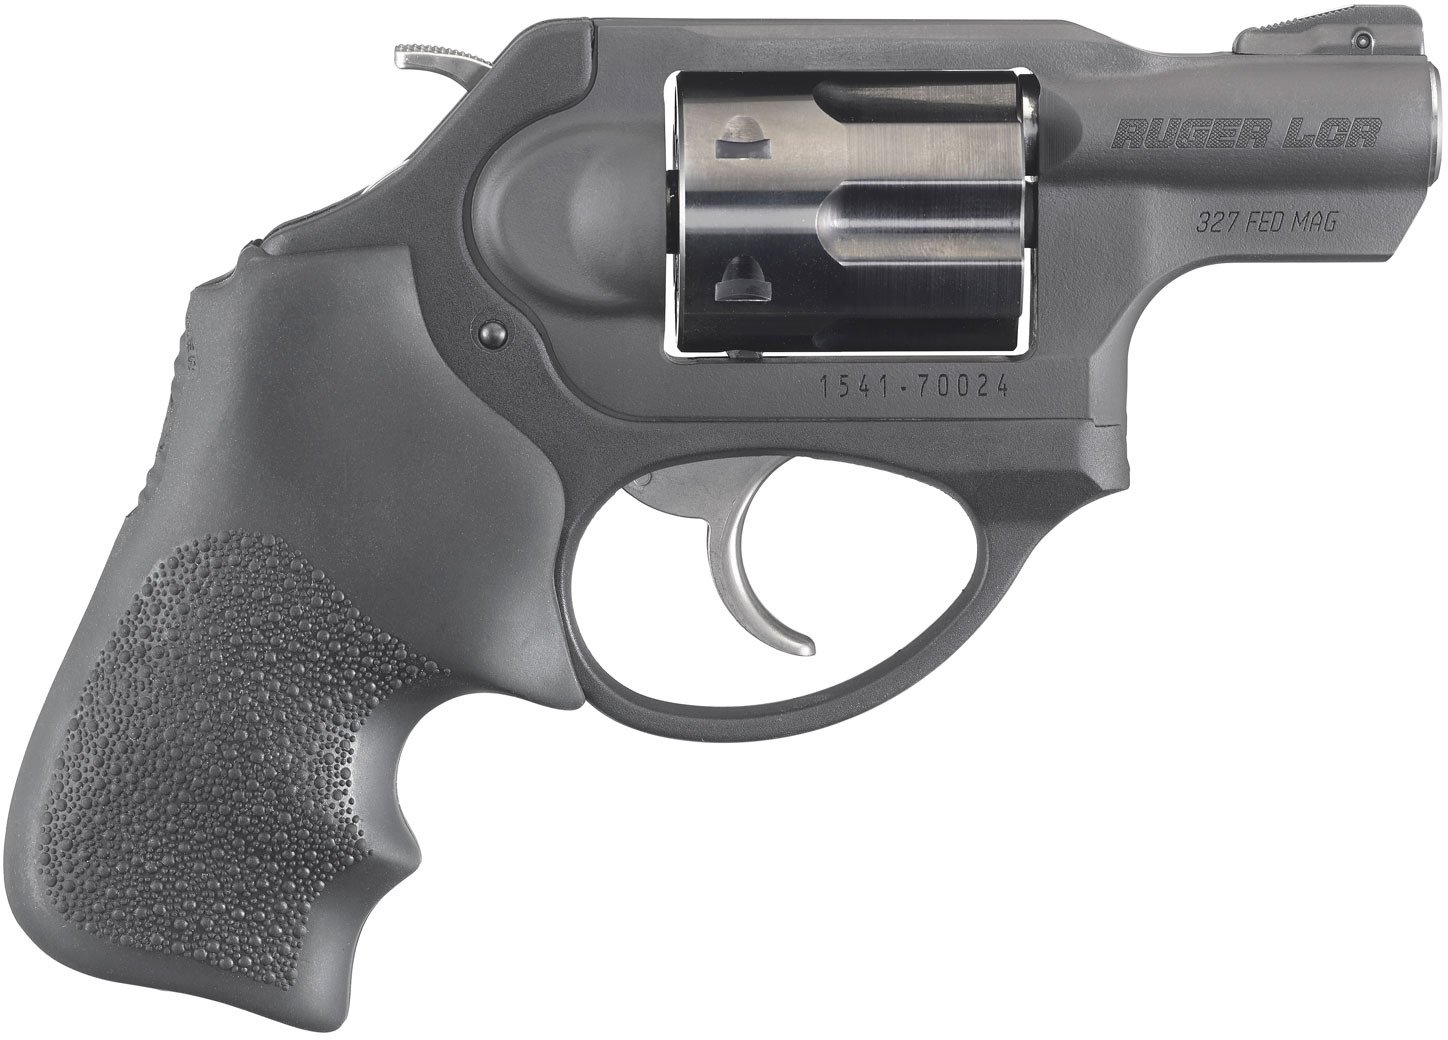 Ruger Lcrx 327 Federal Magnum Revolver Academy 7364